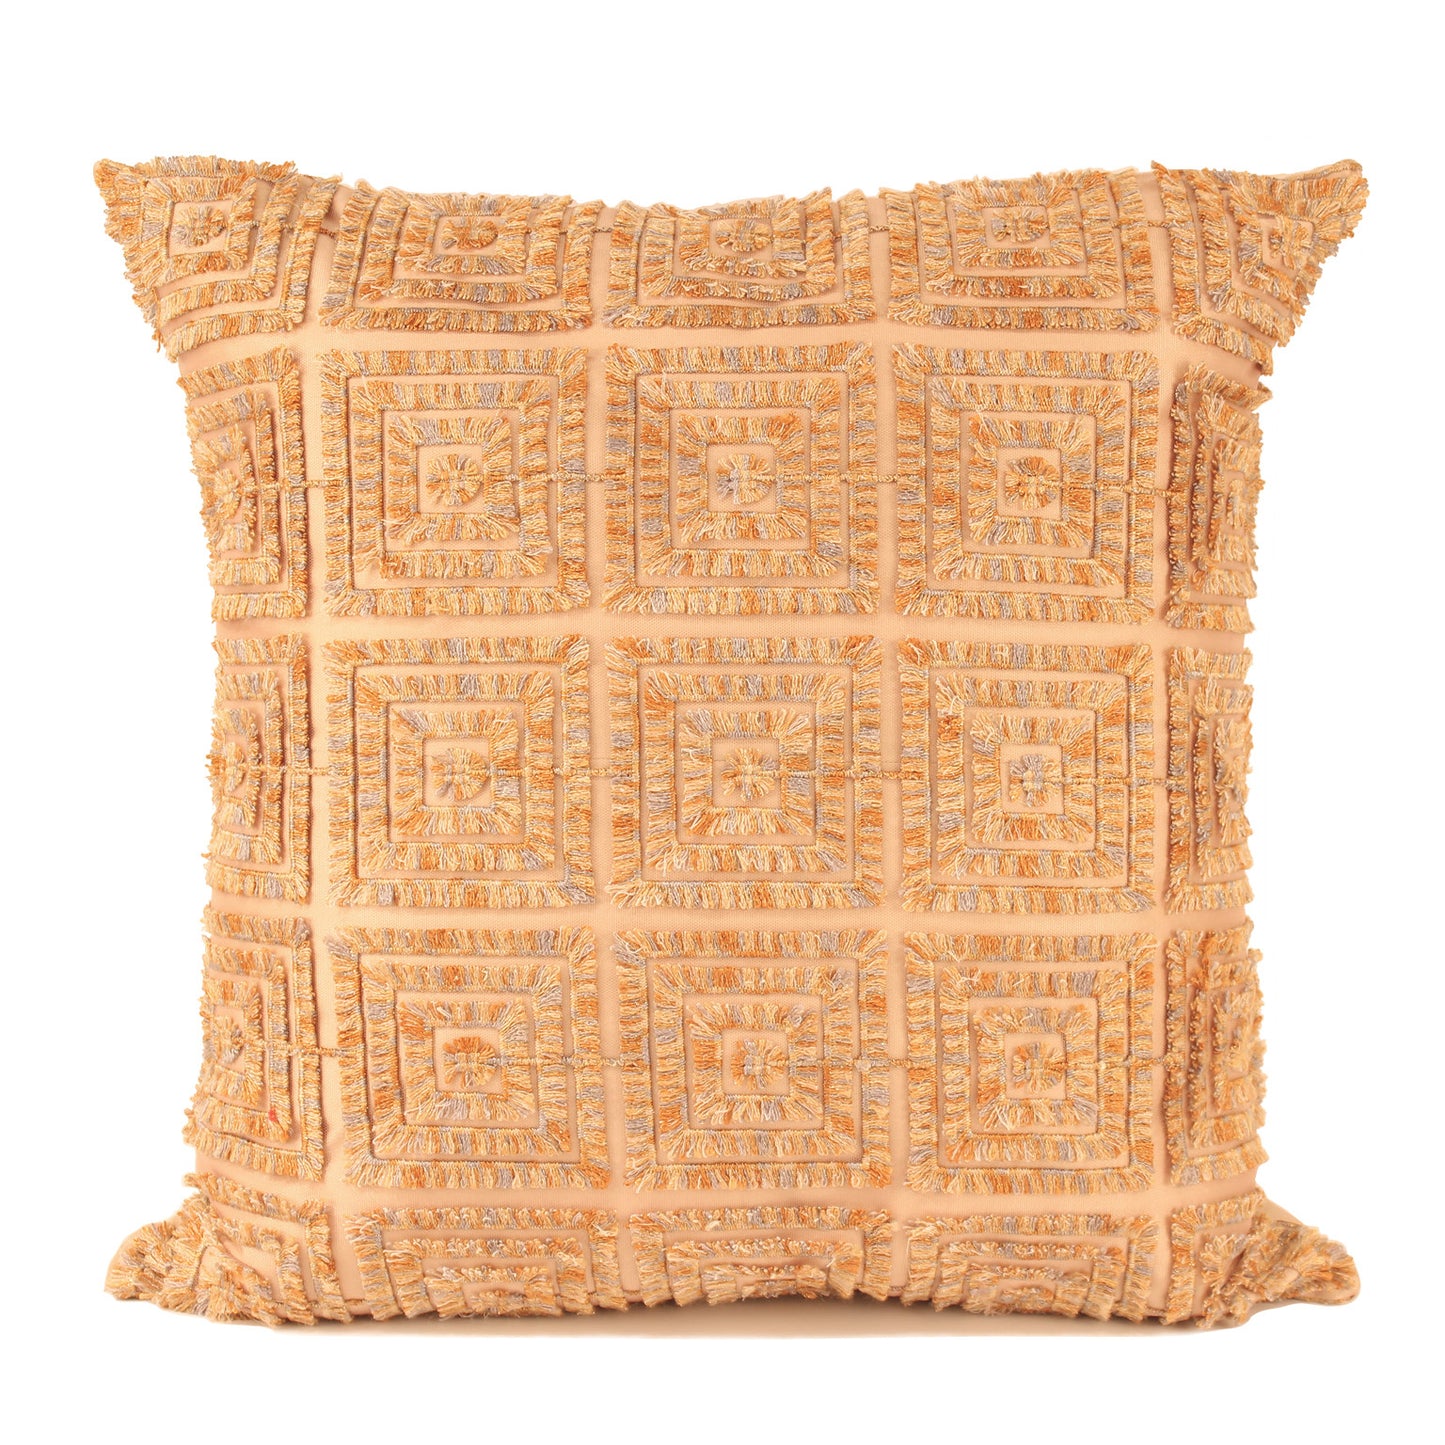 Gold decorative pillow gift ideas by designer German Valdivia 